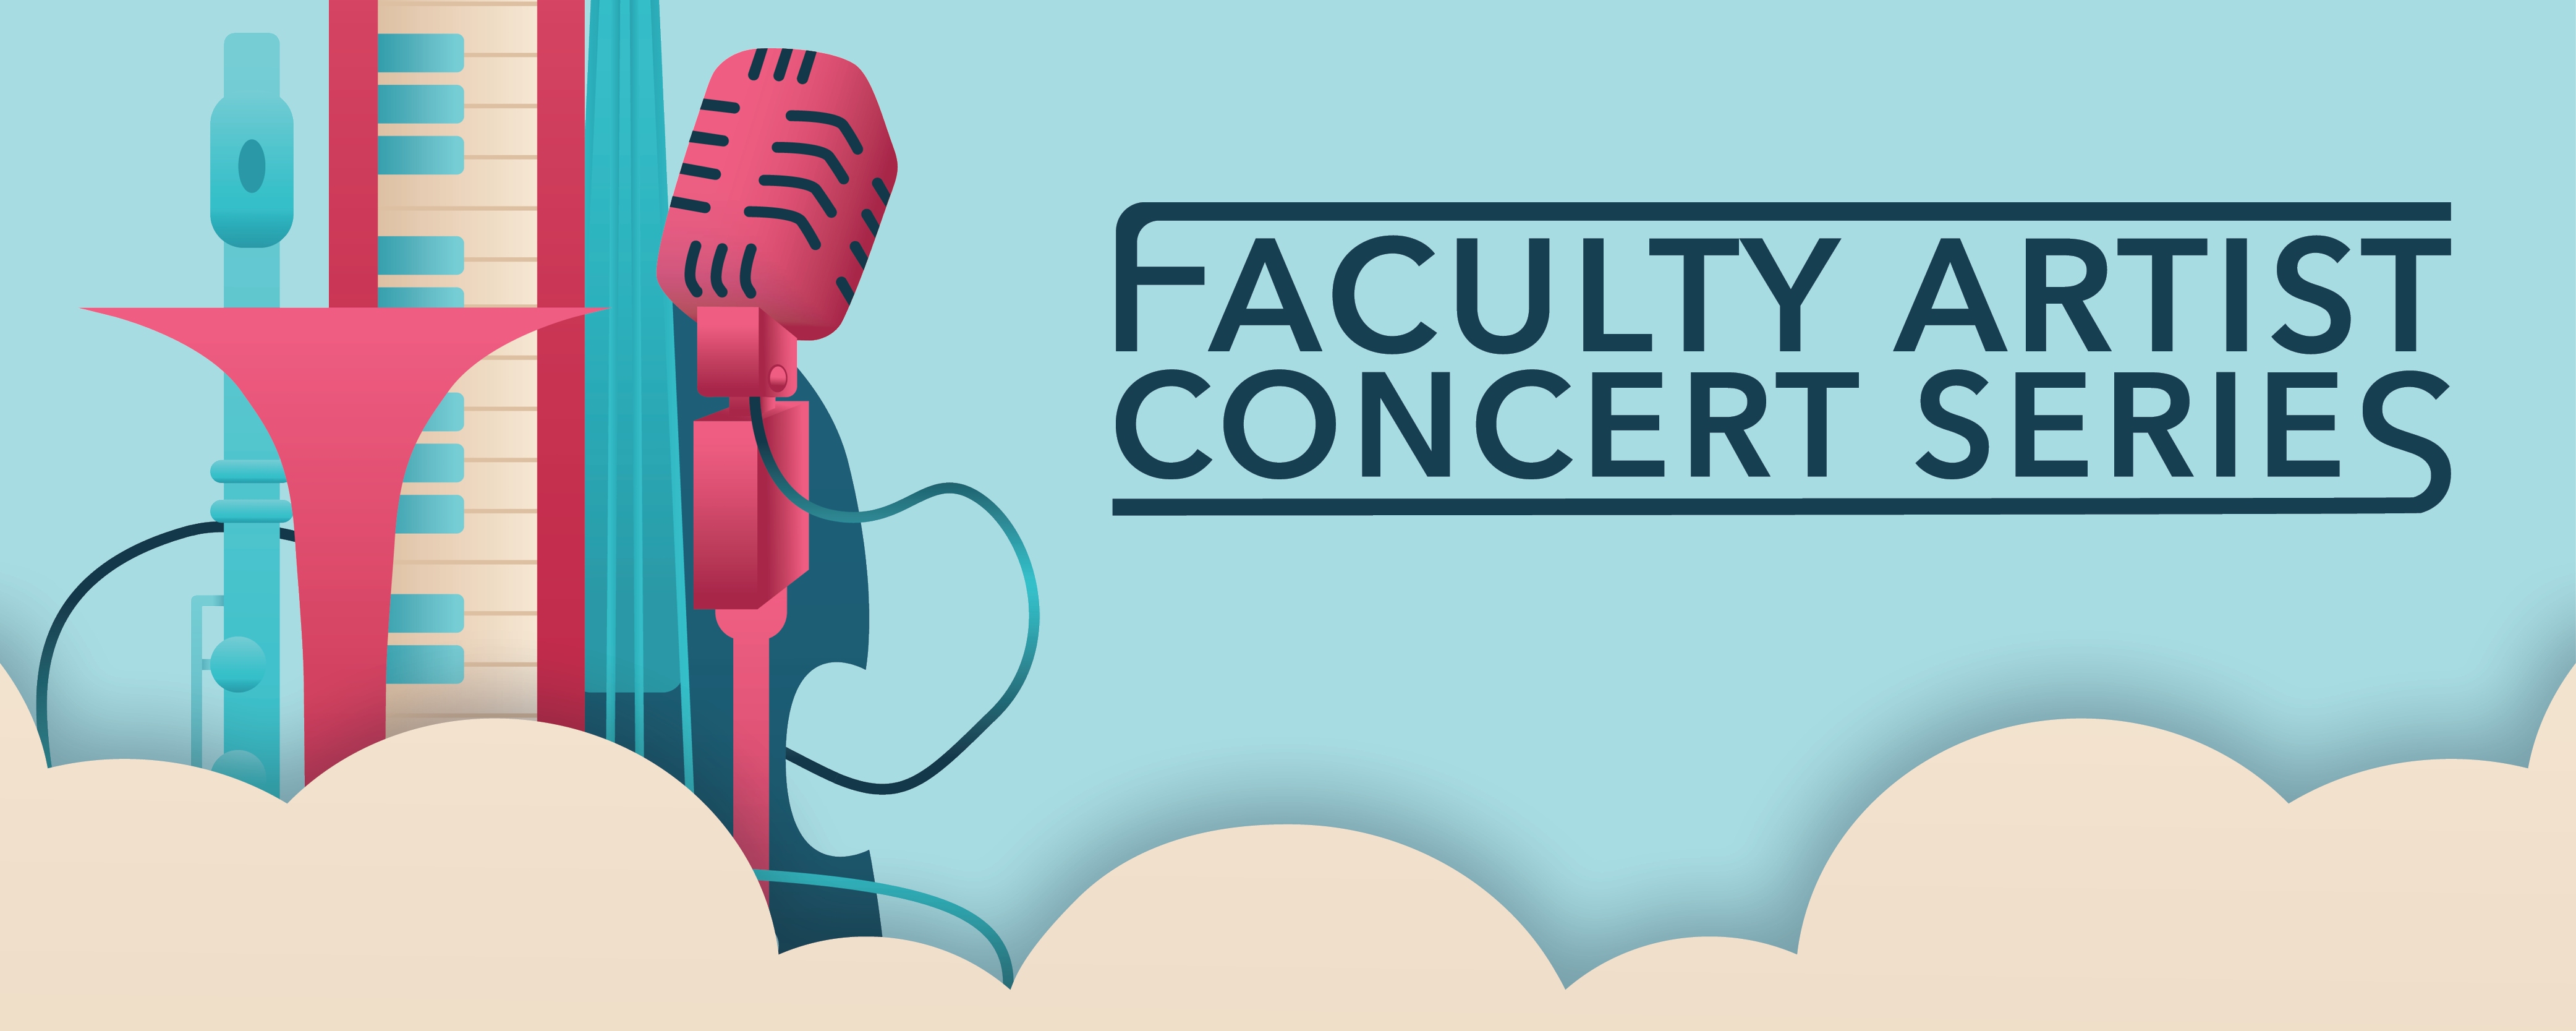 Faculty Artist Concert Series Banner